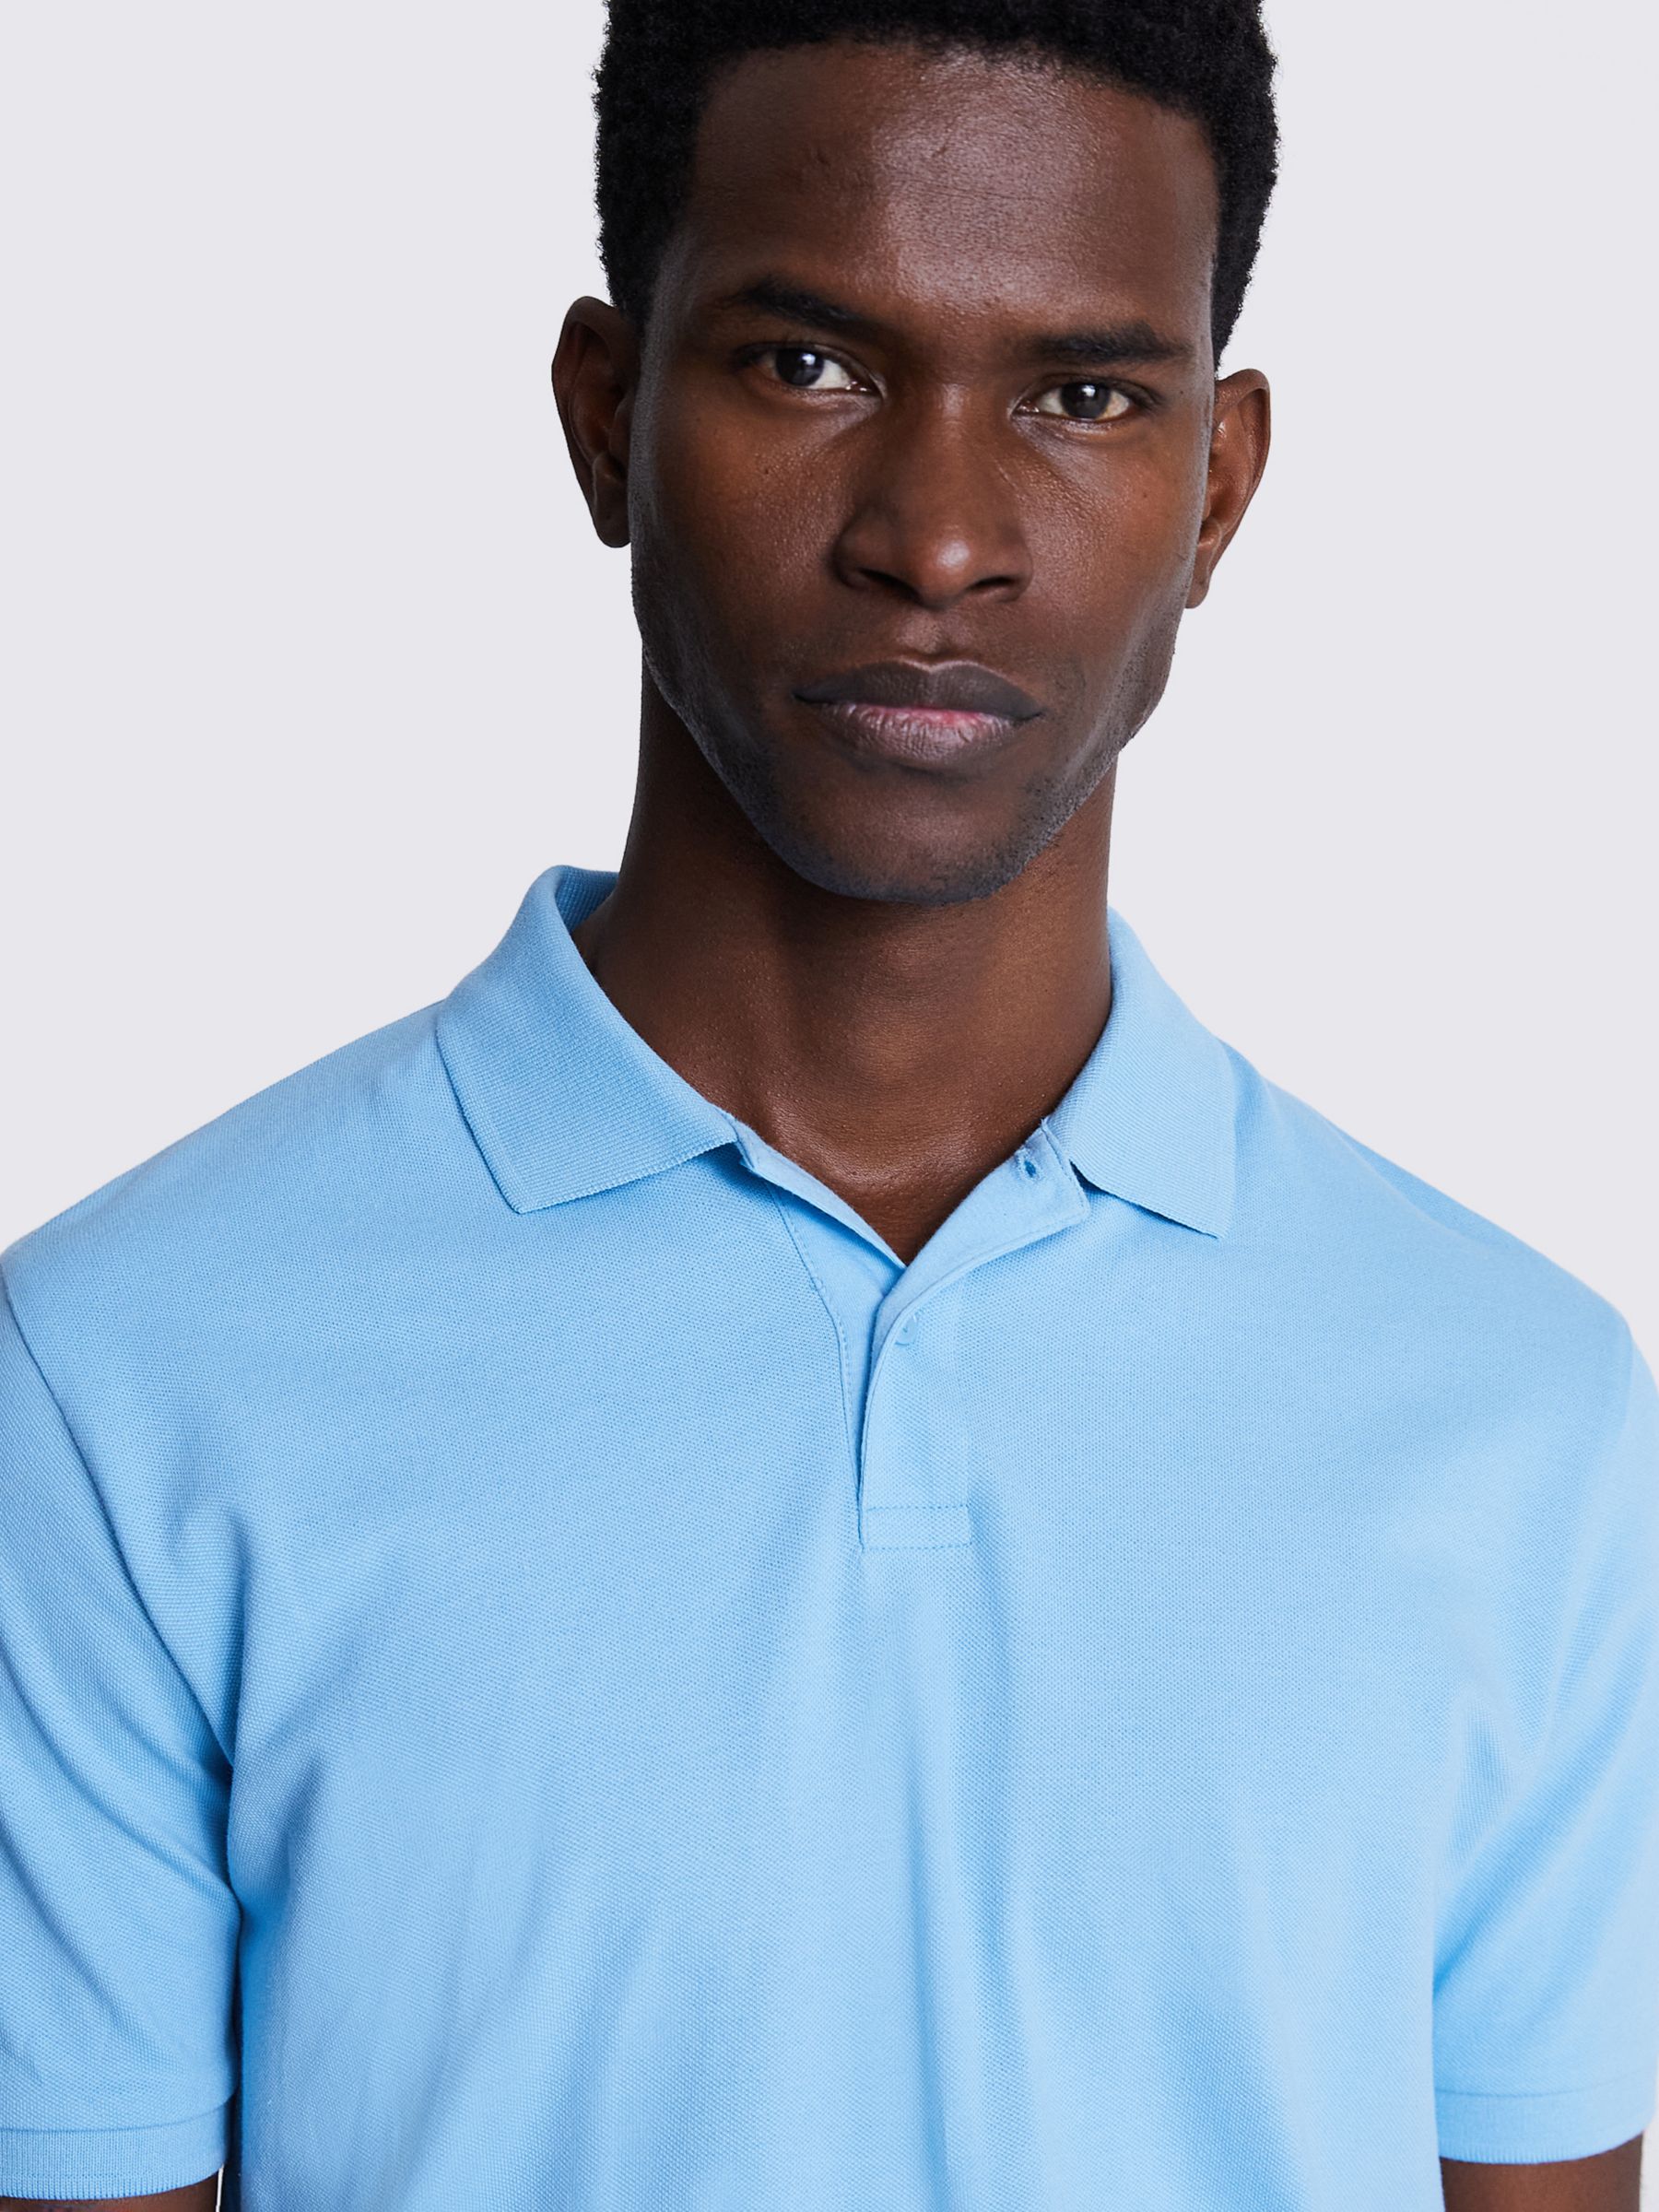 Buy Moss Pique Short Sleeve Polo Shirt Online at johnlewis.com